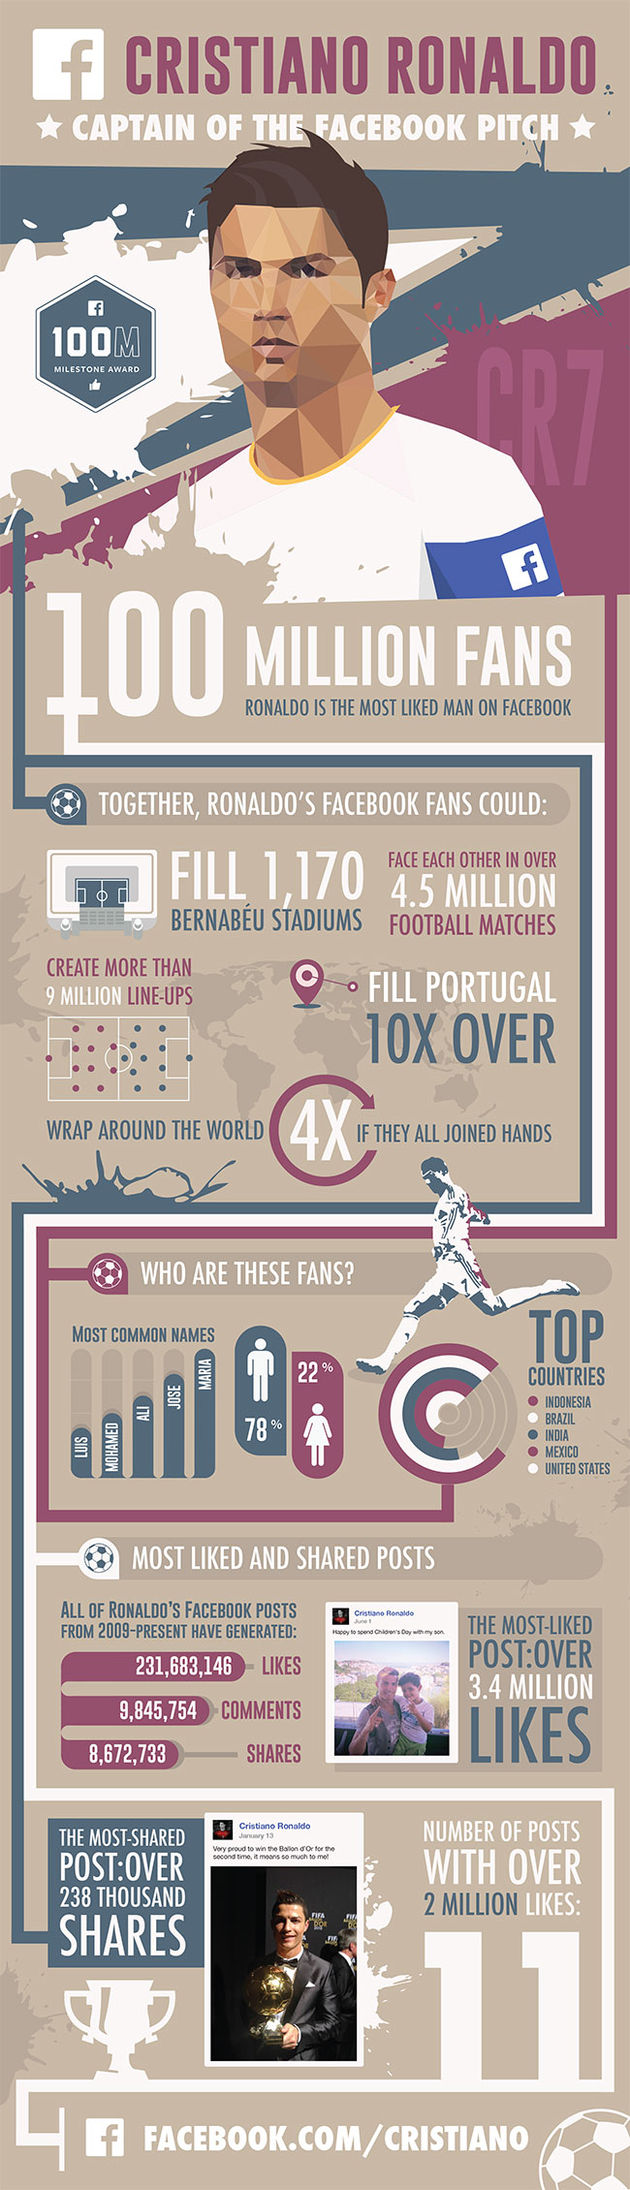 Cristiano_Ronaldo_Infographic_facebook